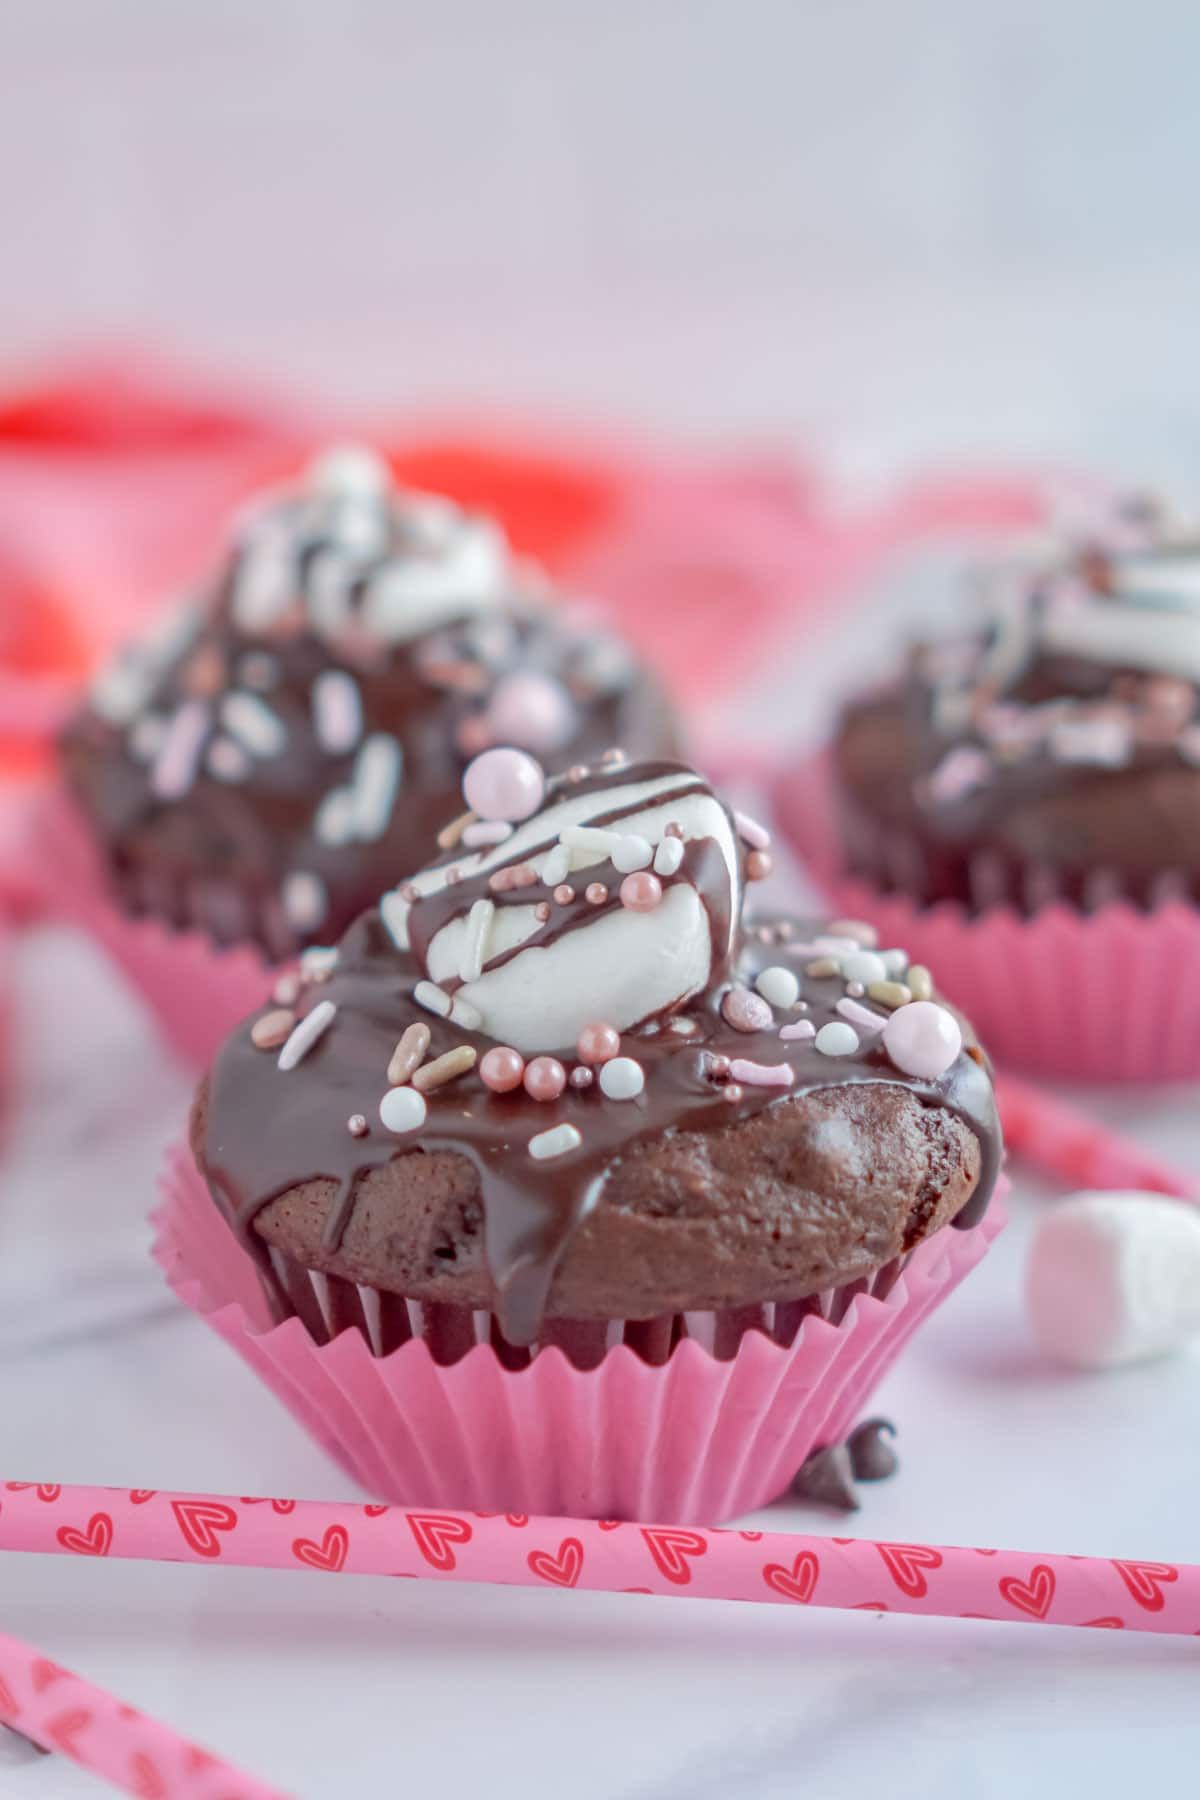 Cupcakes de chocolate caliente decorados para San Valentín